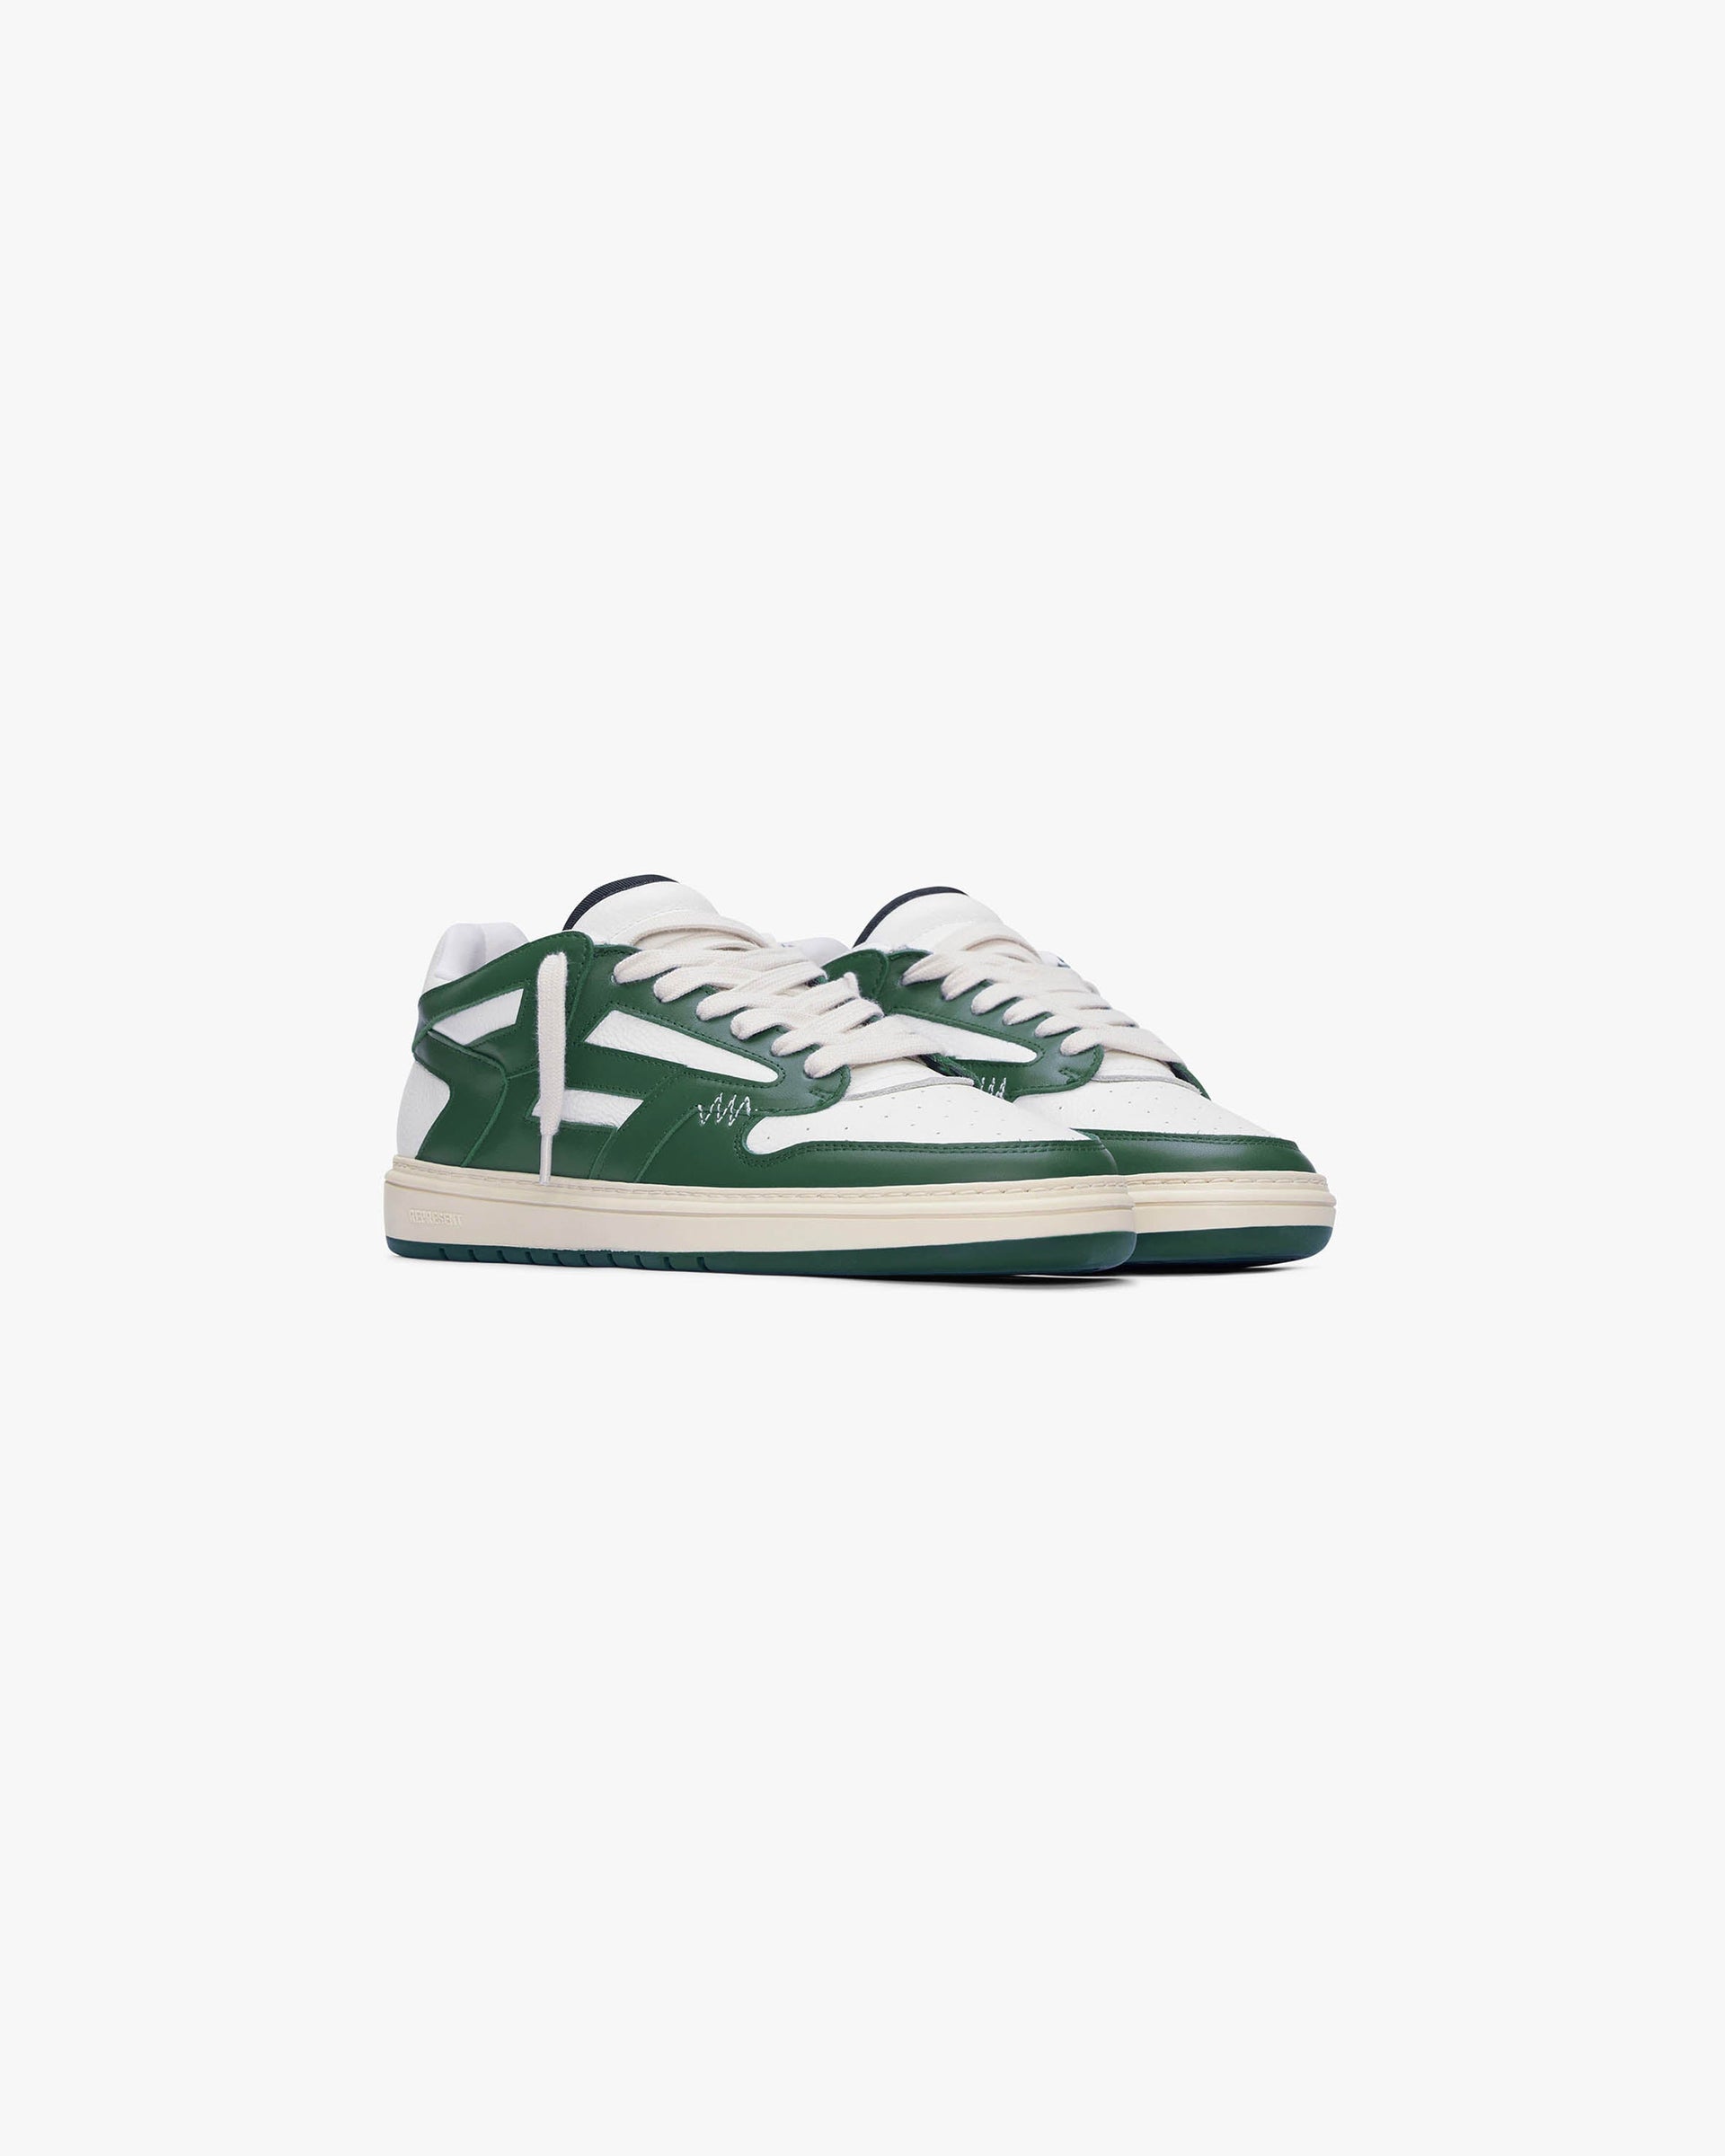 Reptor Low | Racing Green Flat White Footwear SS23 | Represent Clo